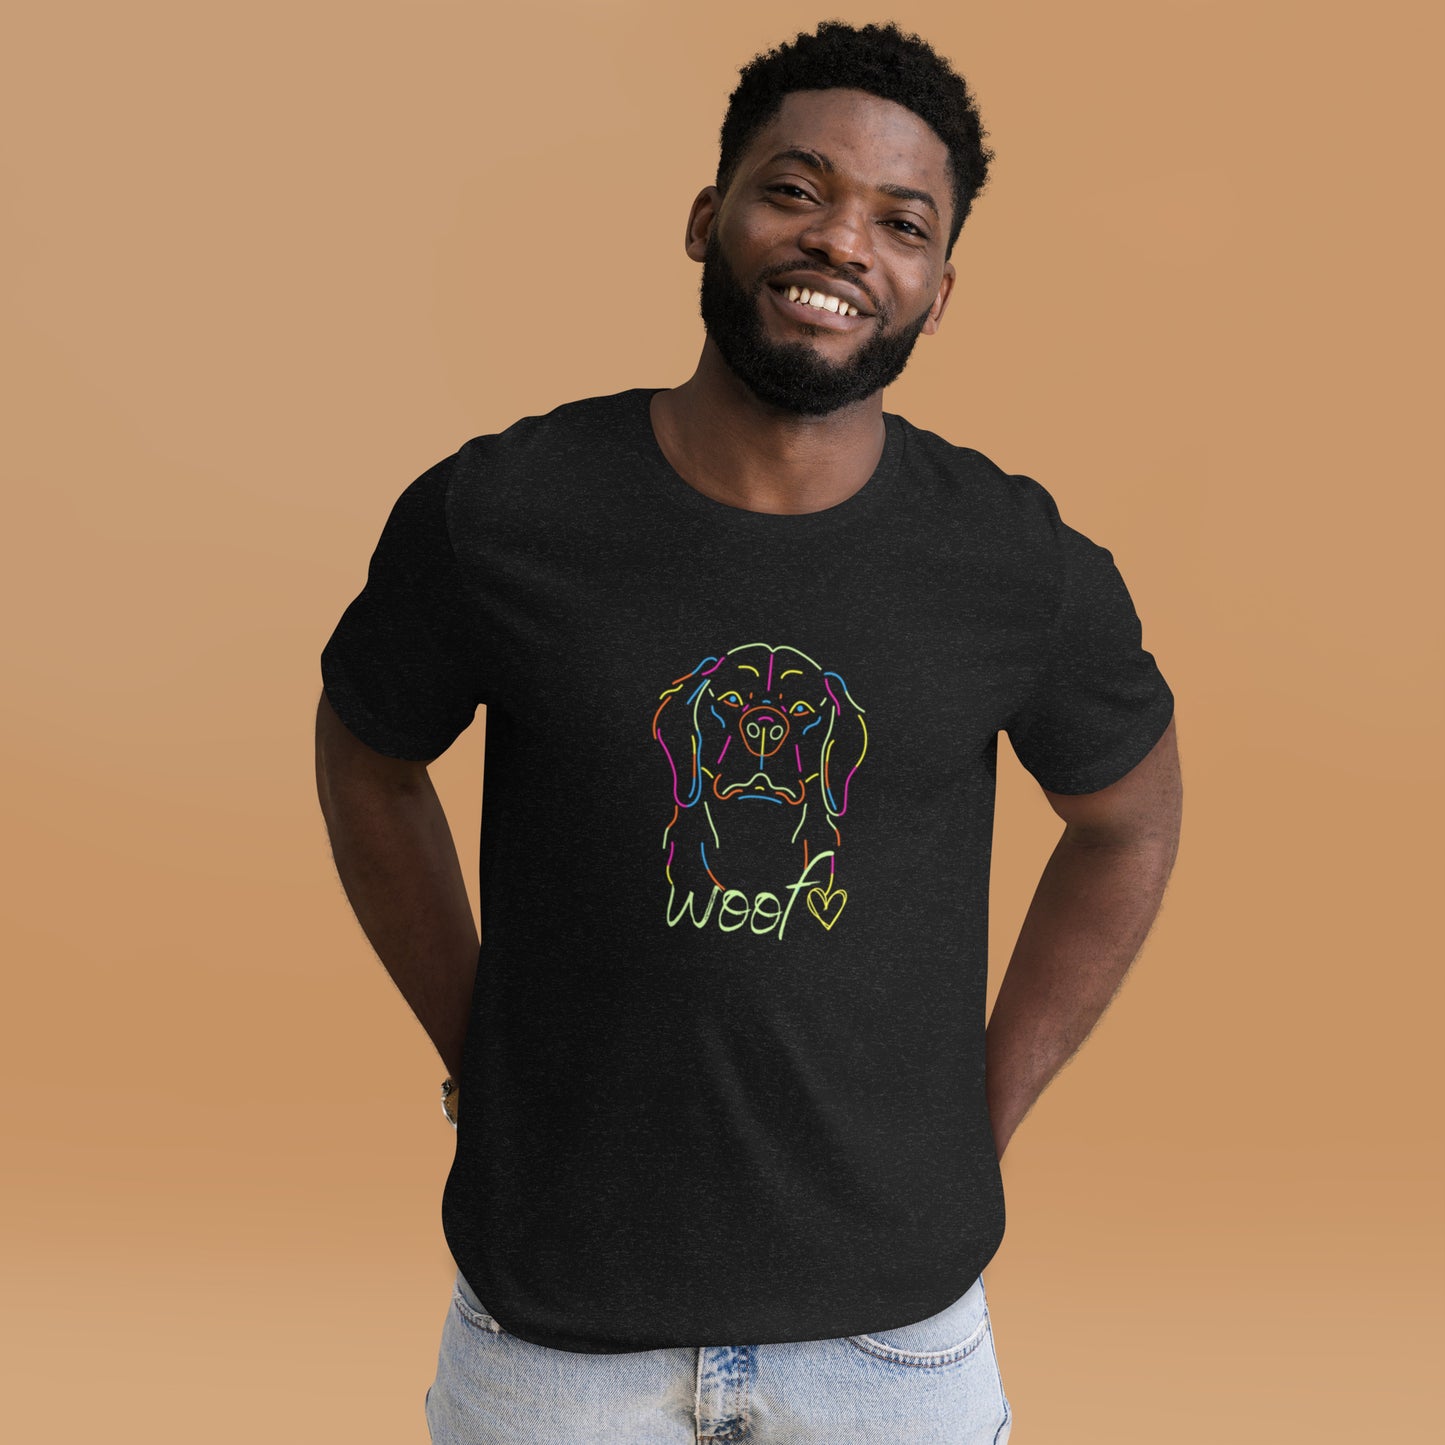 Woof - Unisex t-shirt